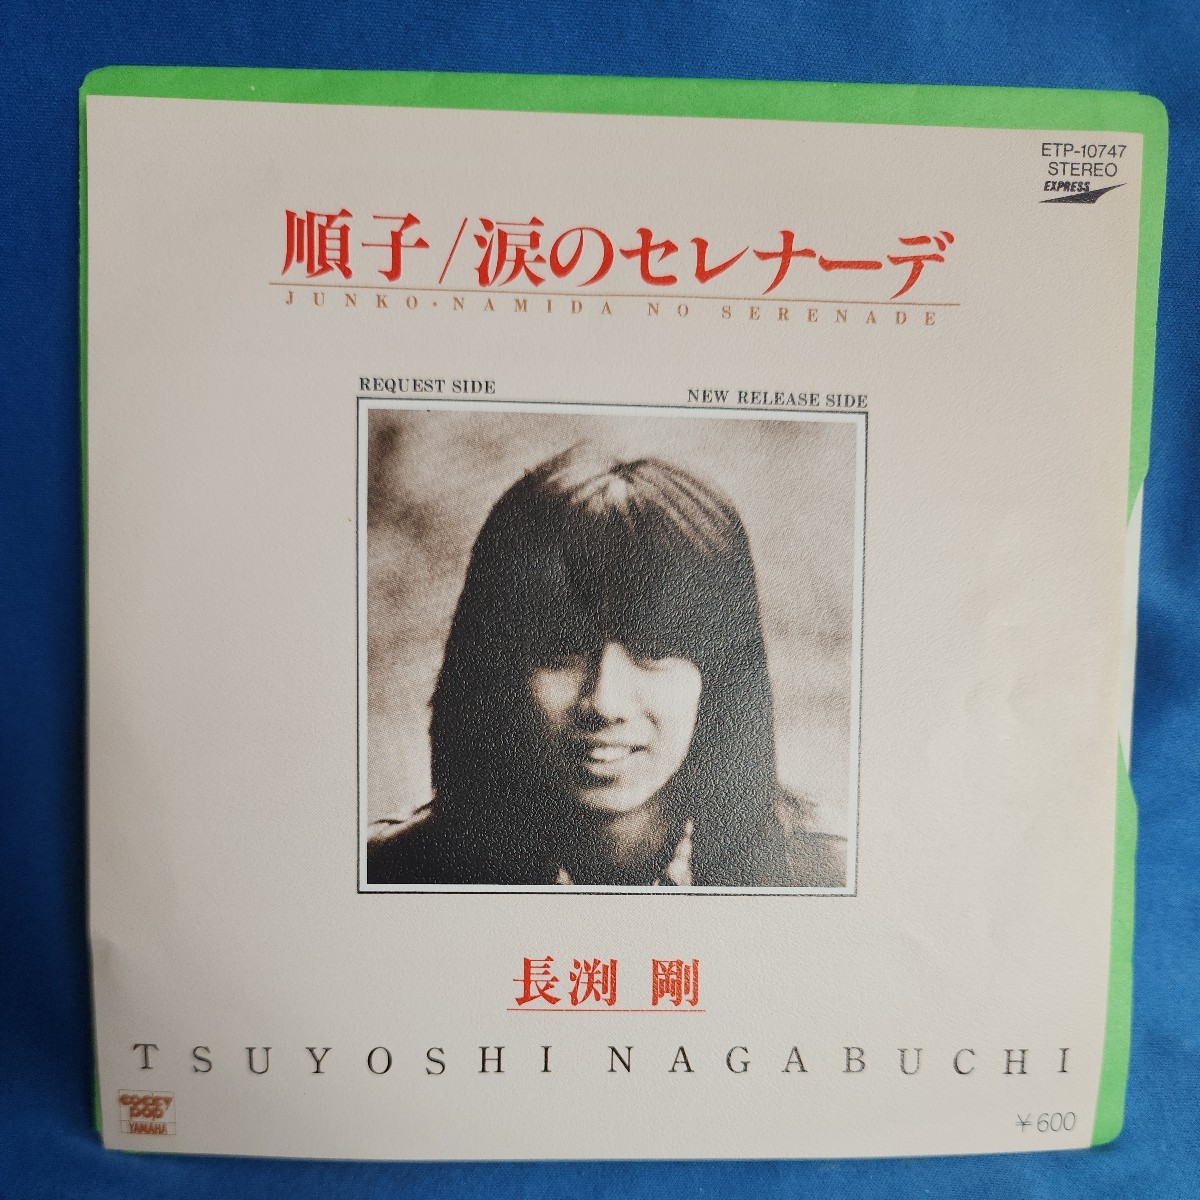 [EP record ] Nagabuchi Tsuyoshi sequence ./ tears. Serena -te/N maru ticket * store / super-discount 2bs